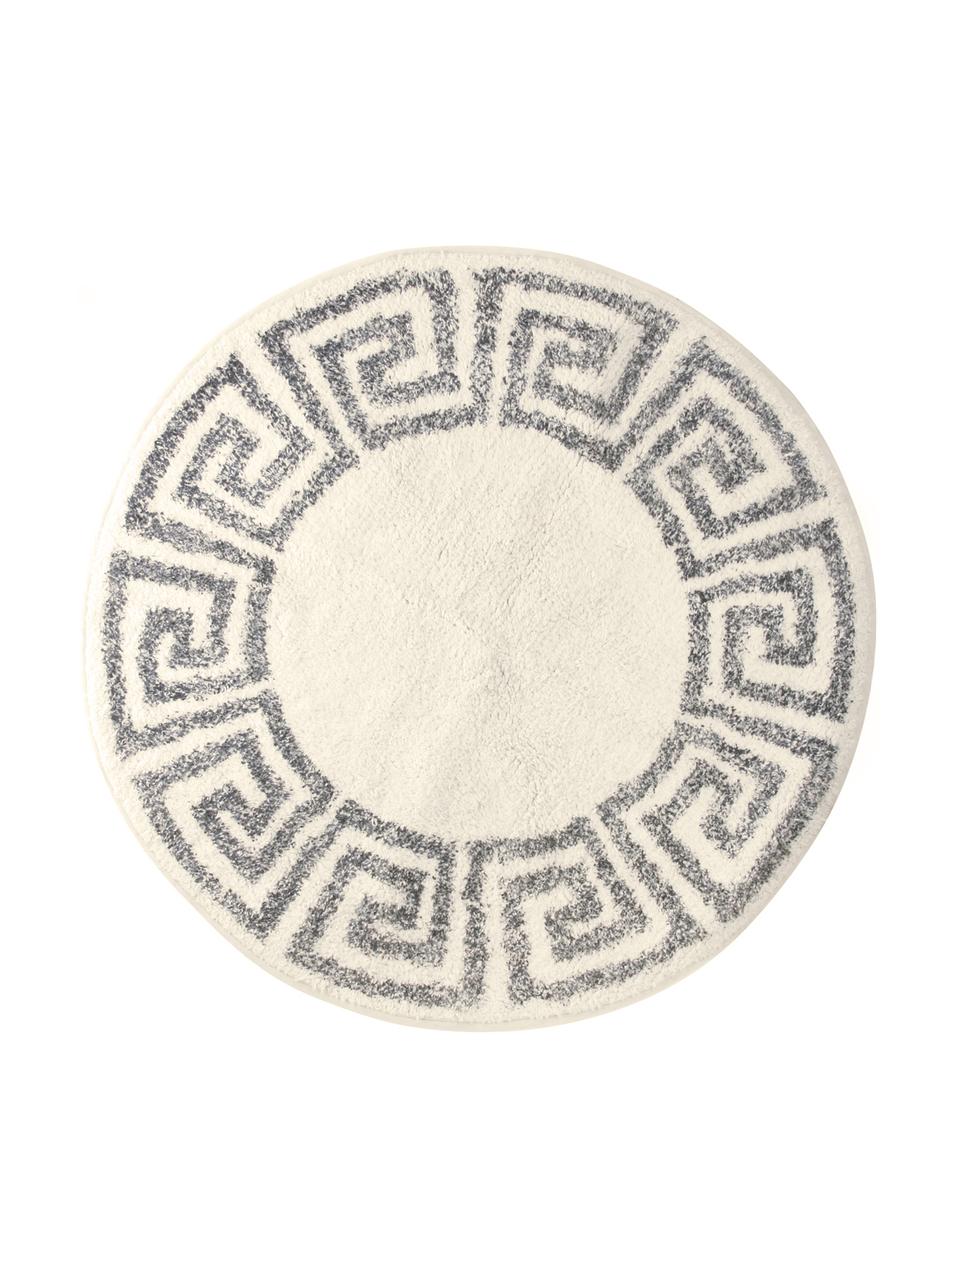 Grote ronde badmat Greek, antislip, Bovenzijde: 100% katoen, Onderzijde: silicone, Crèmekleurig, grijs, Ø 120 cm